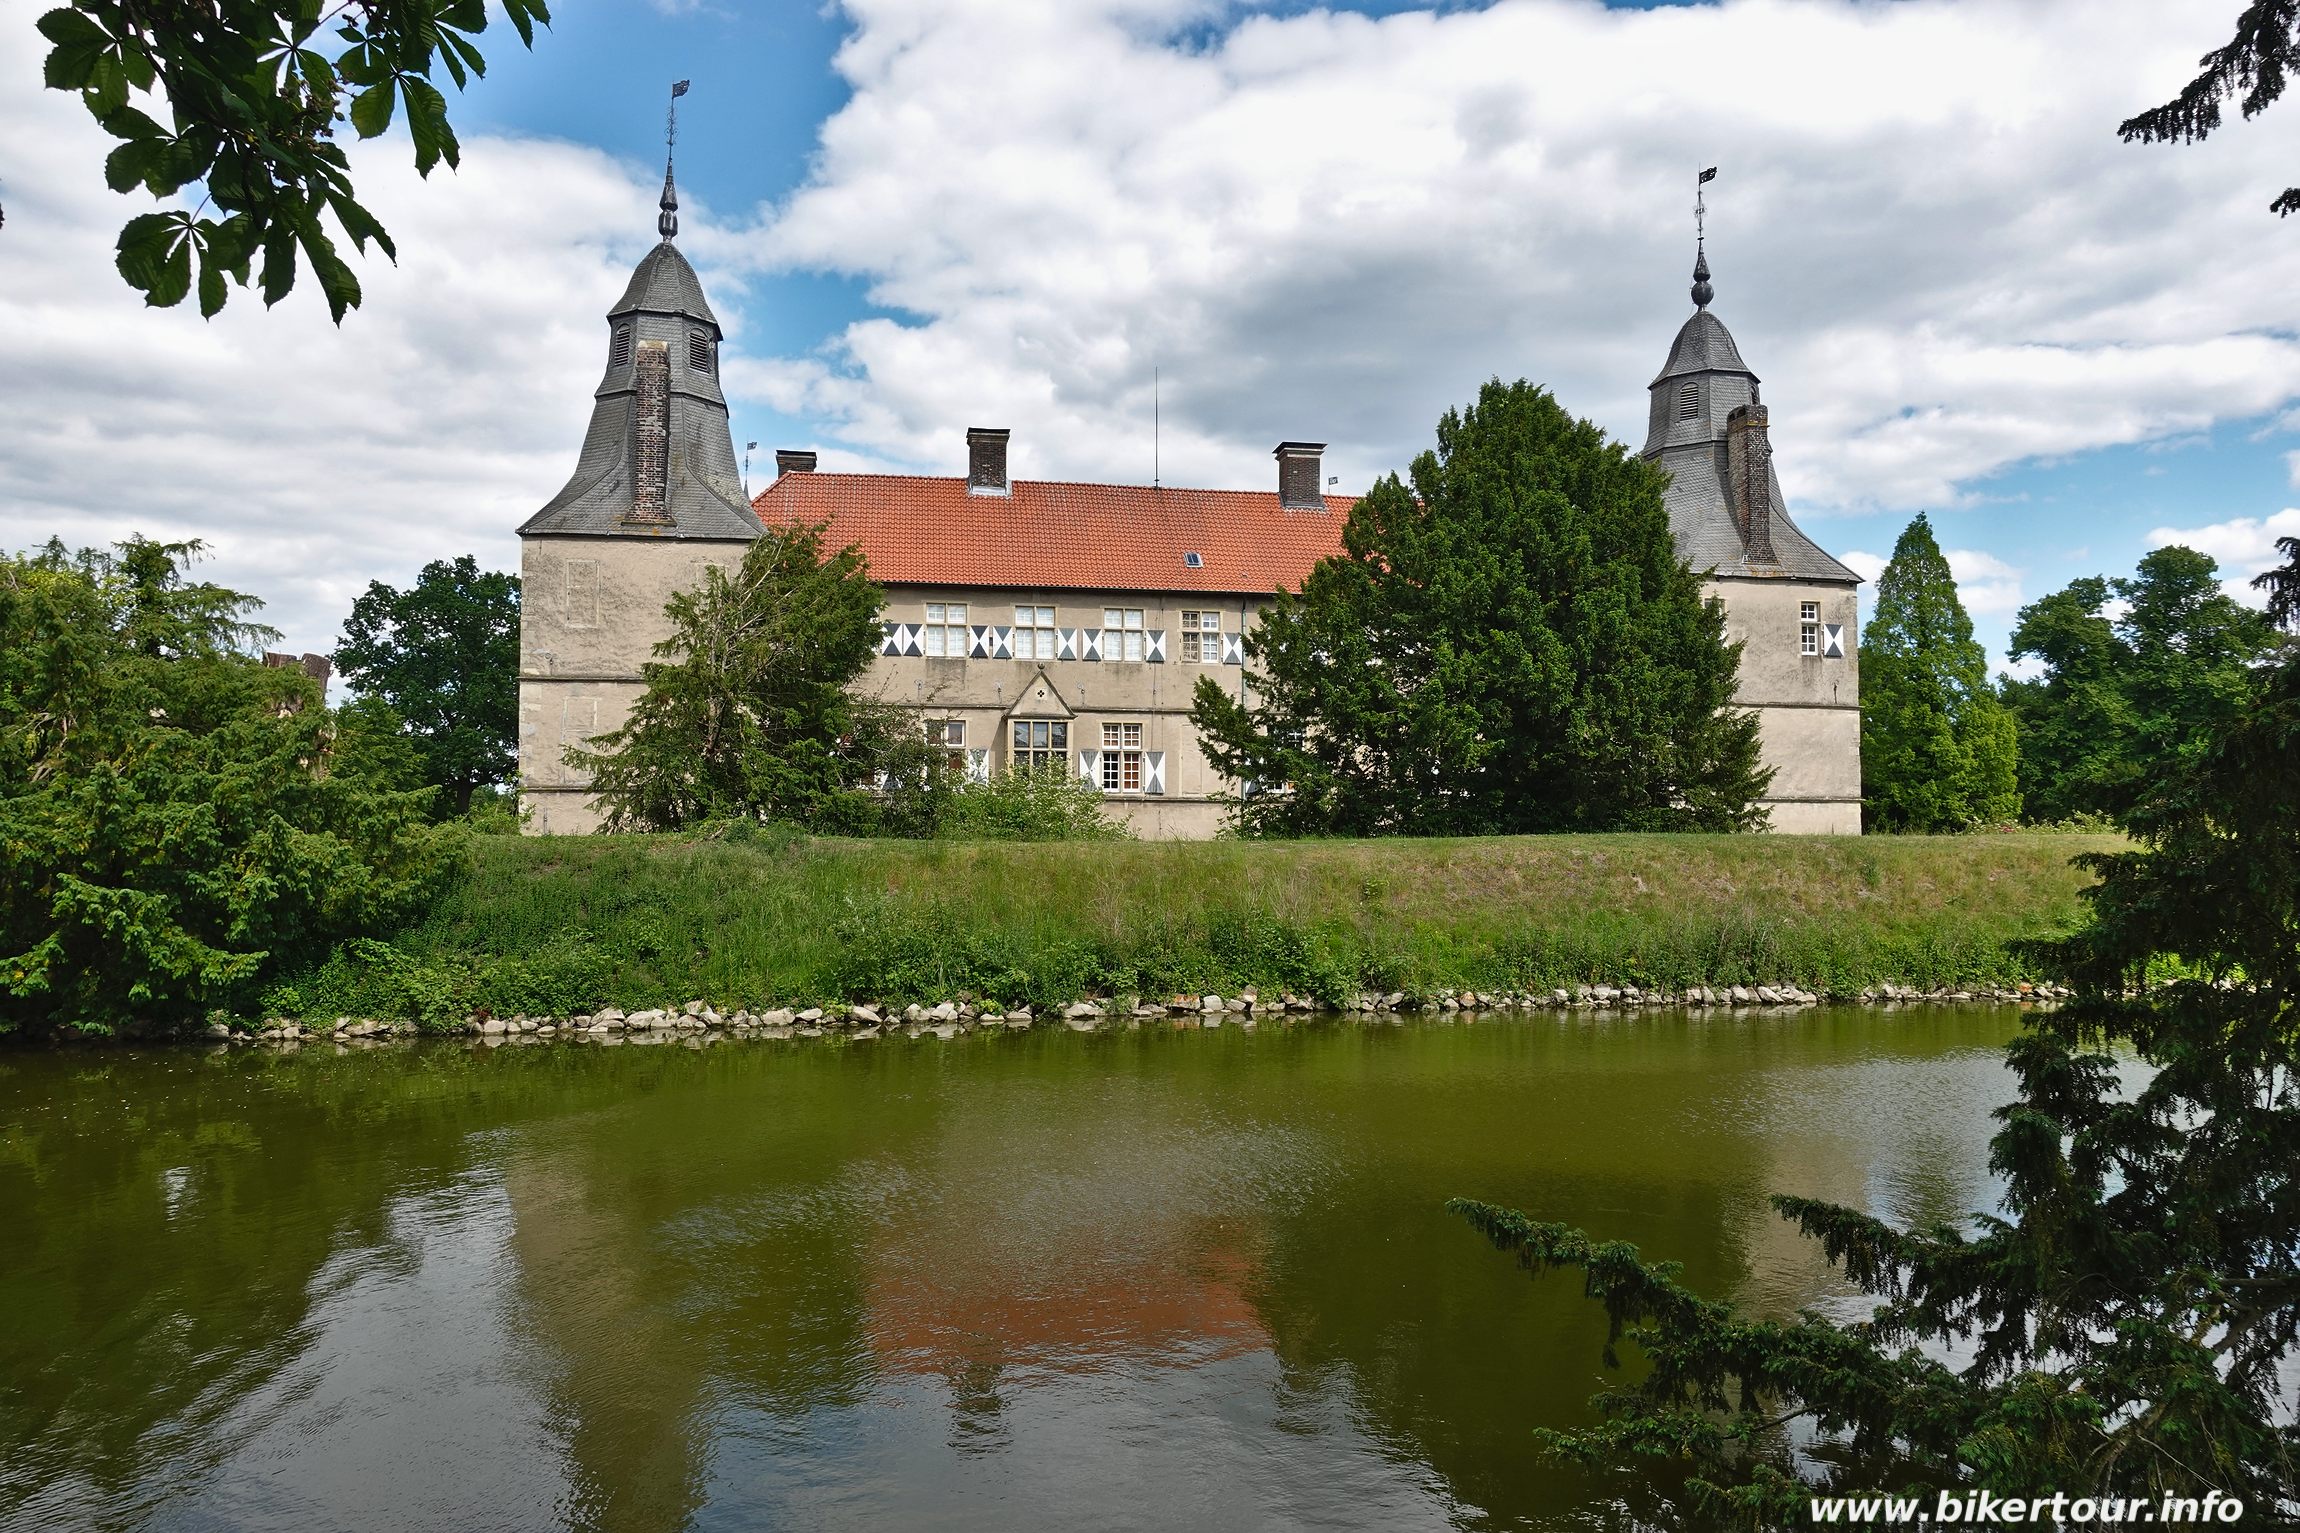 Schloss Westerwinkel